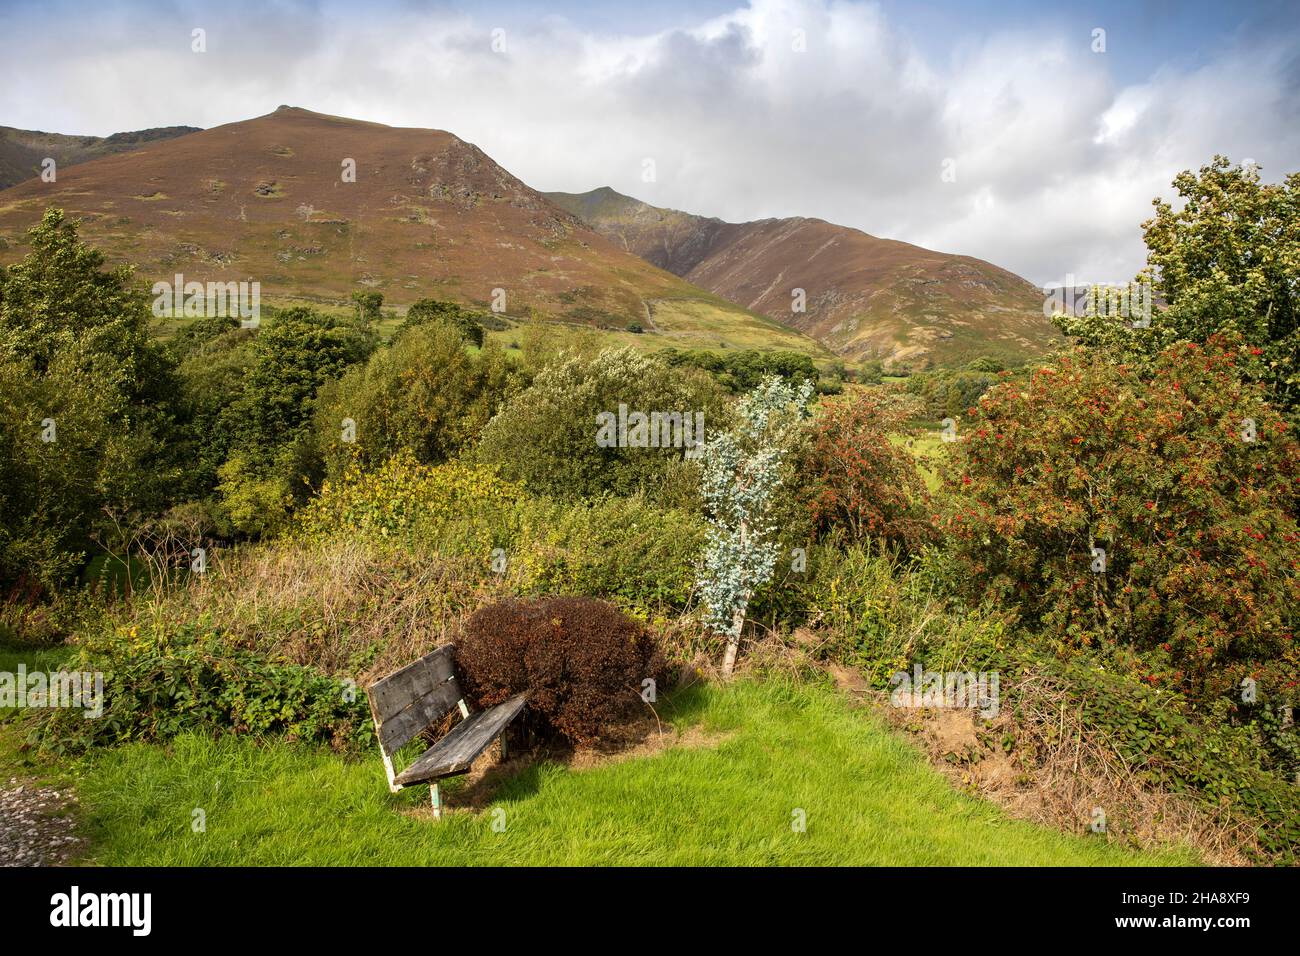 UK, Cumbria, Allerdale, Keswick, Threlkeld, public bench in garden below Blencathra ‘Saddleback’ hill Stock Photo